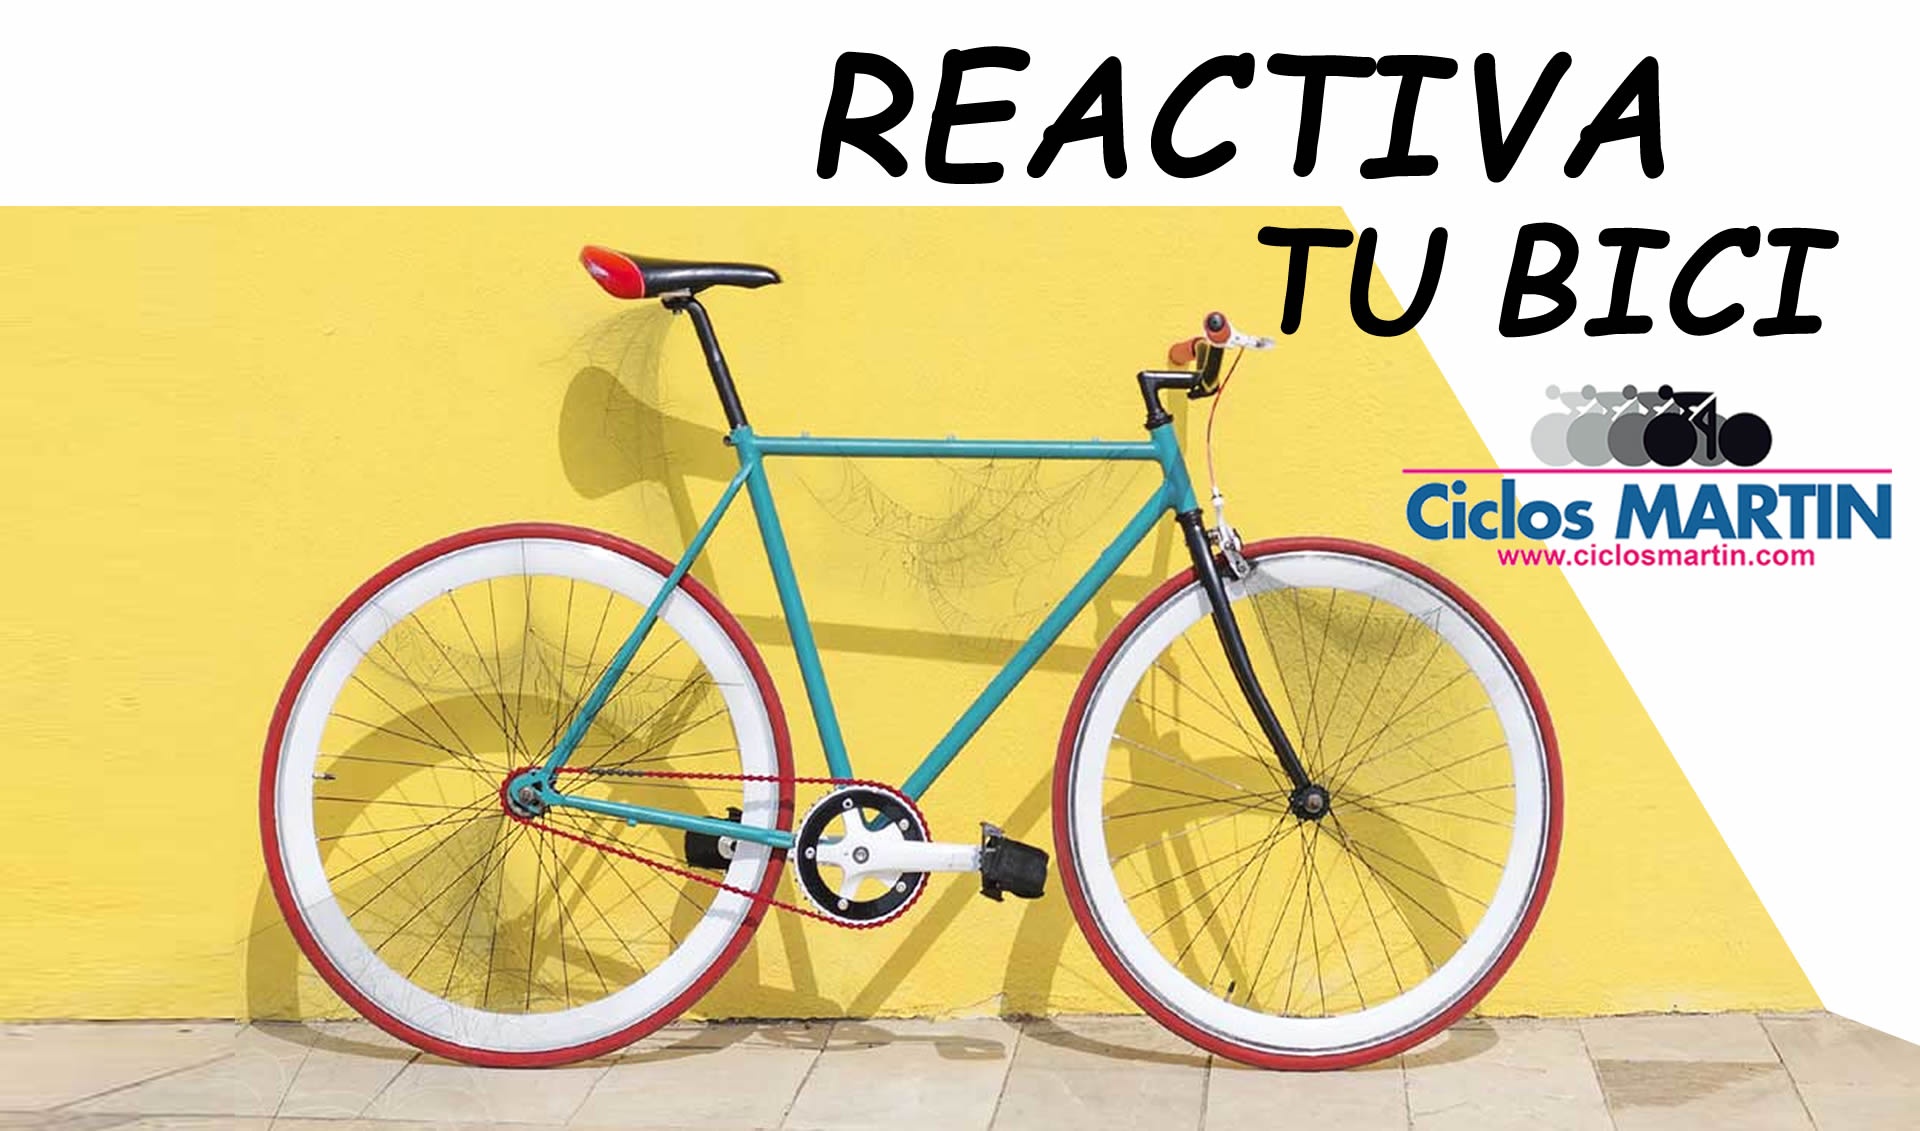 Campaña reactiva tu bici en Pamplona